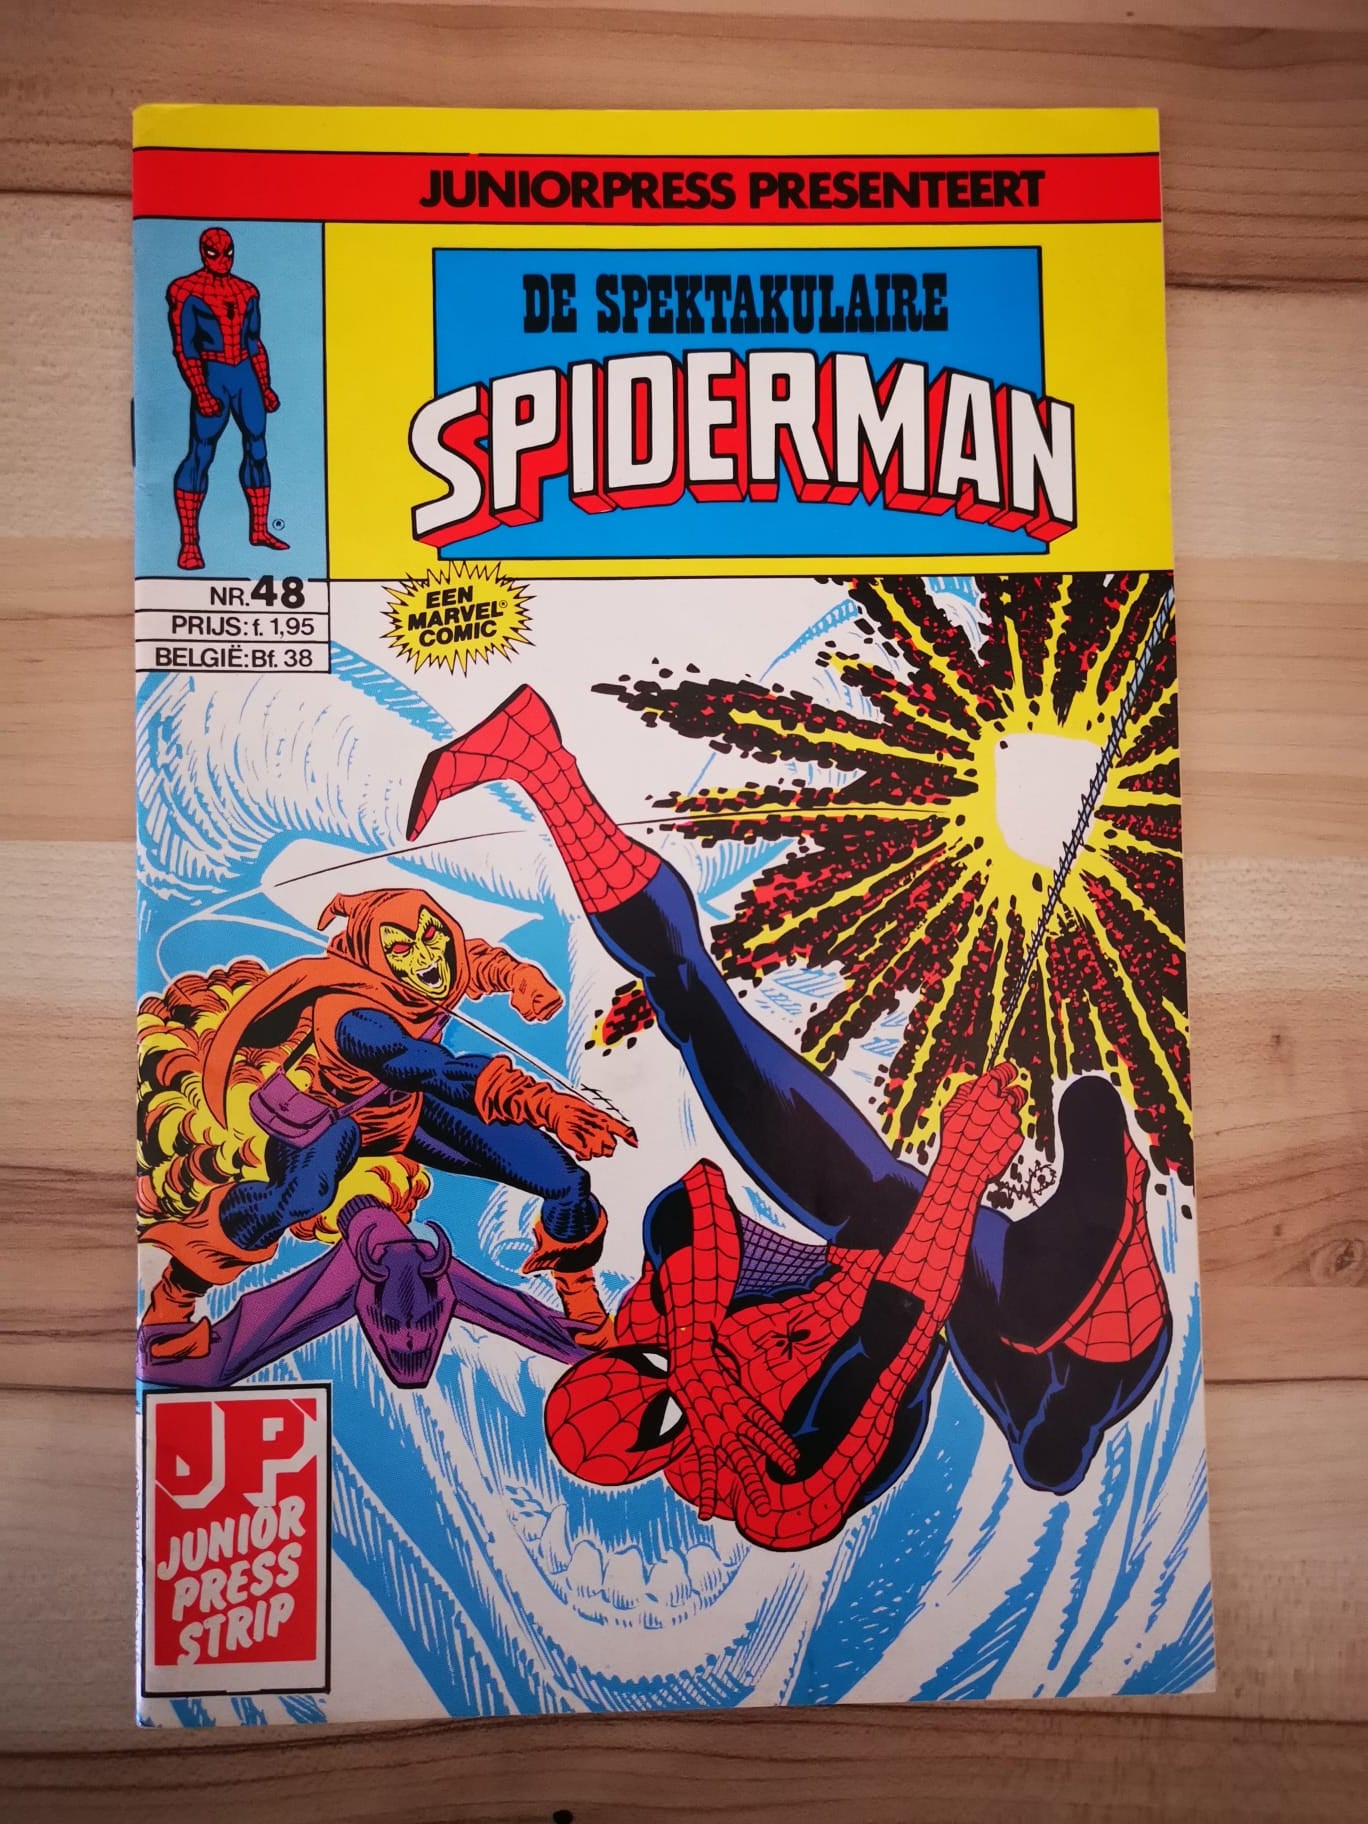 De spektakulaire spiderman #48